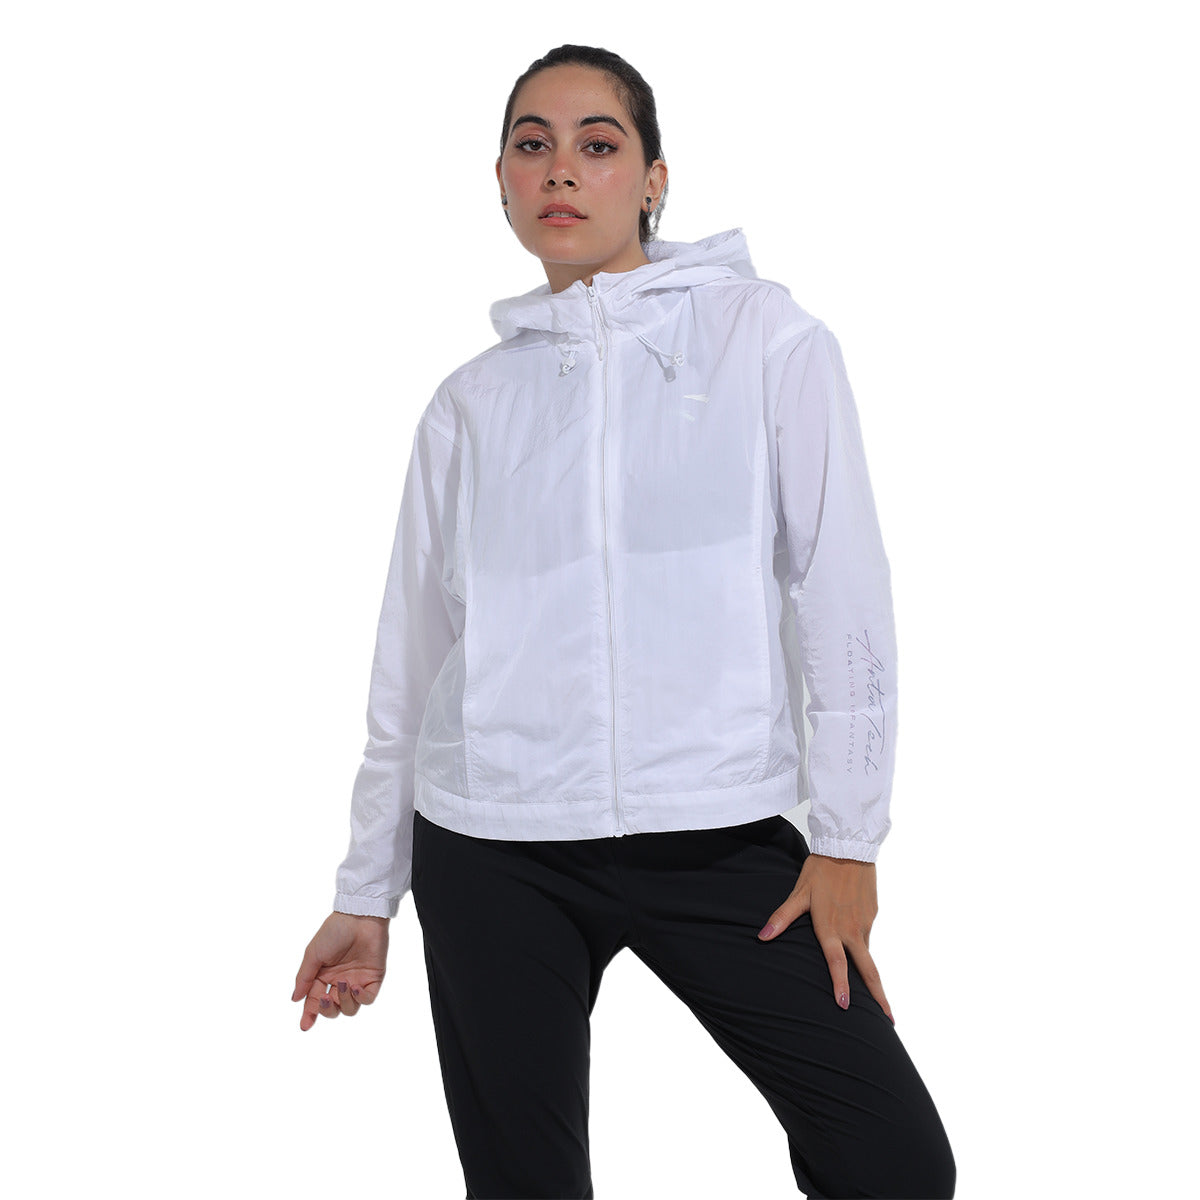 Anta Woven Track Sweatshirt with Hoodies For Women, White